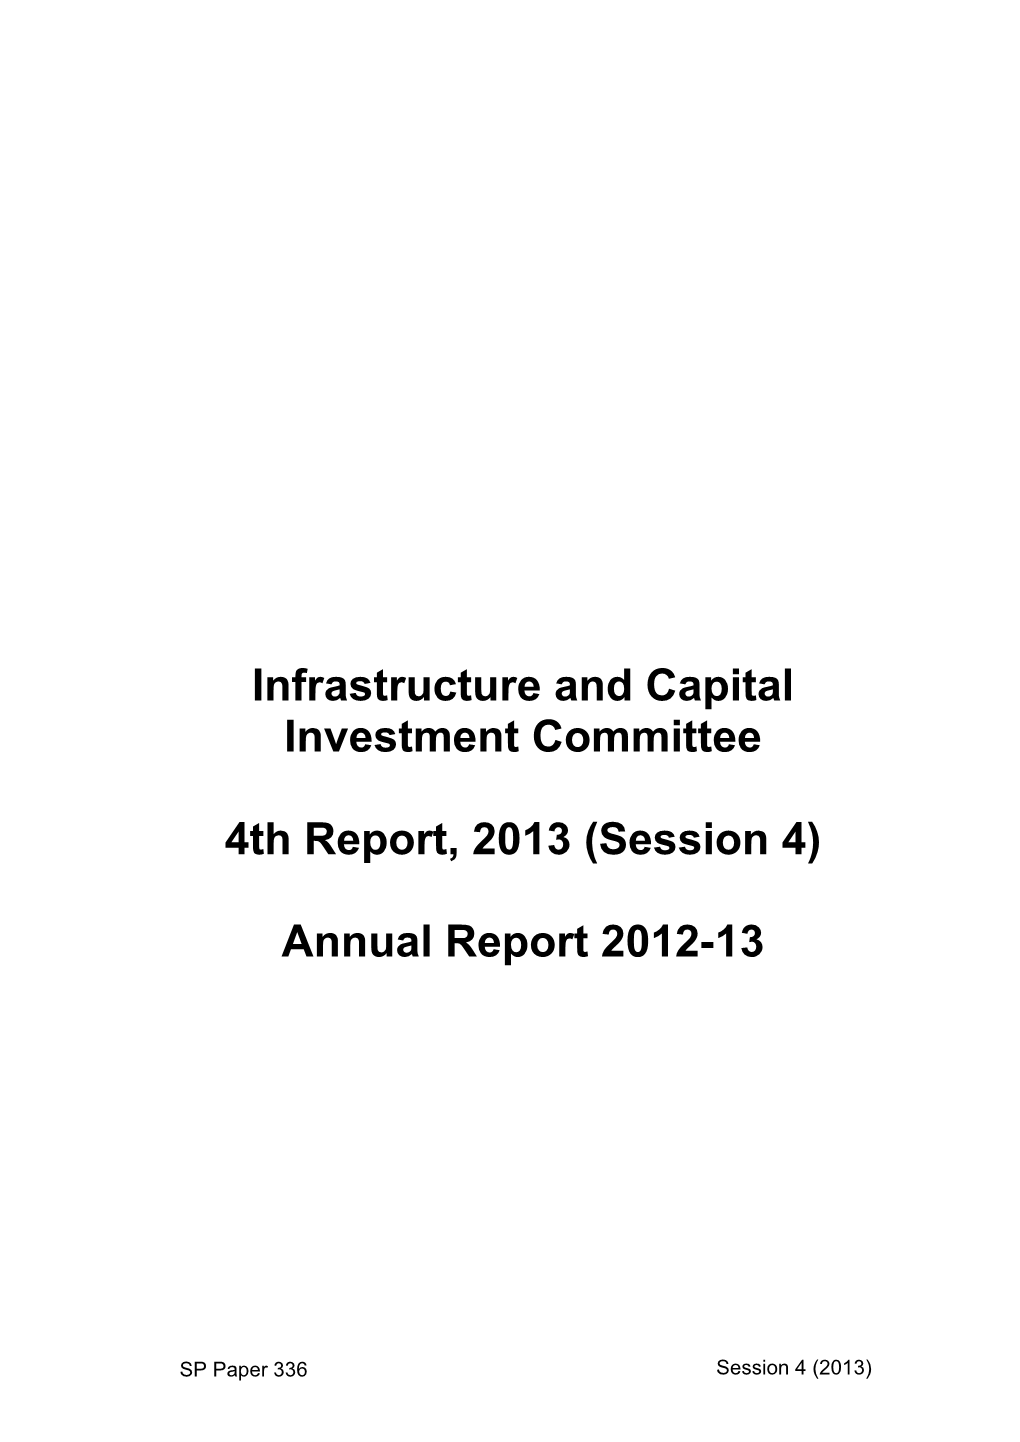 Draft Annual Report